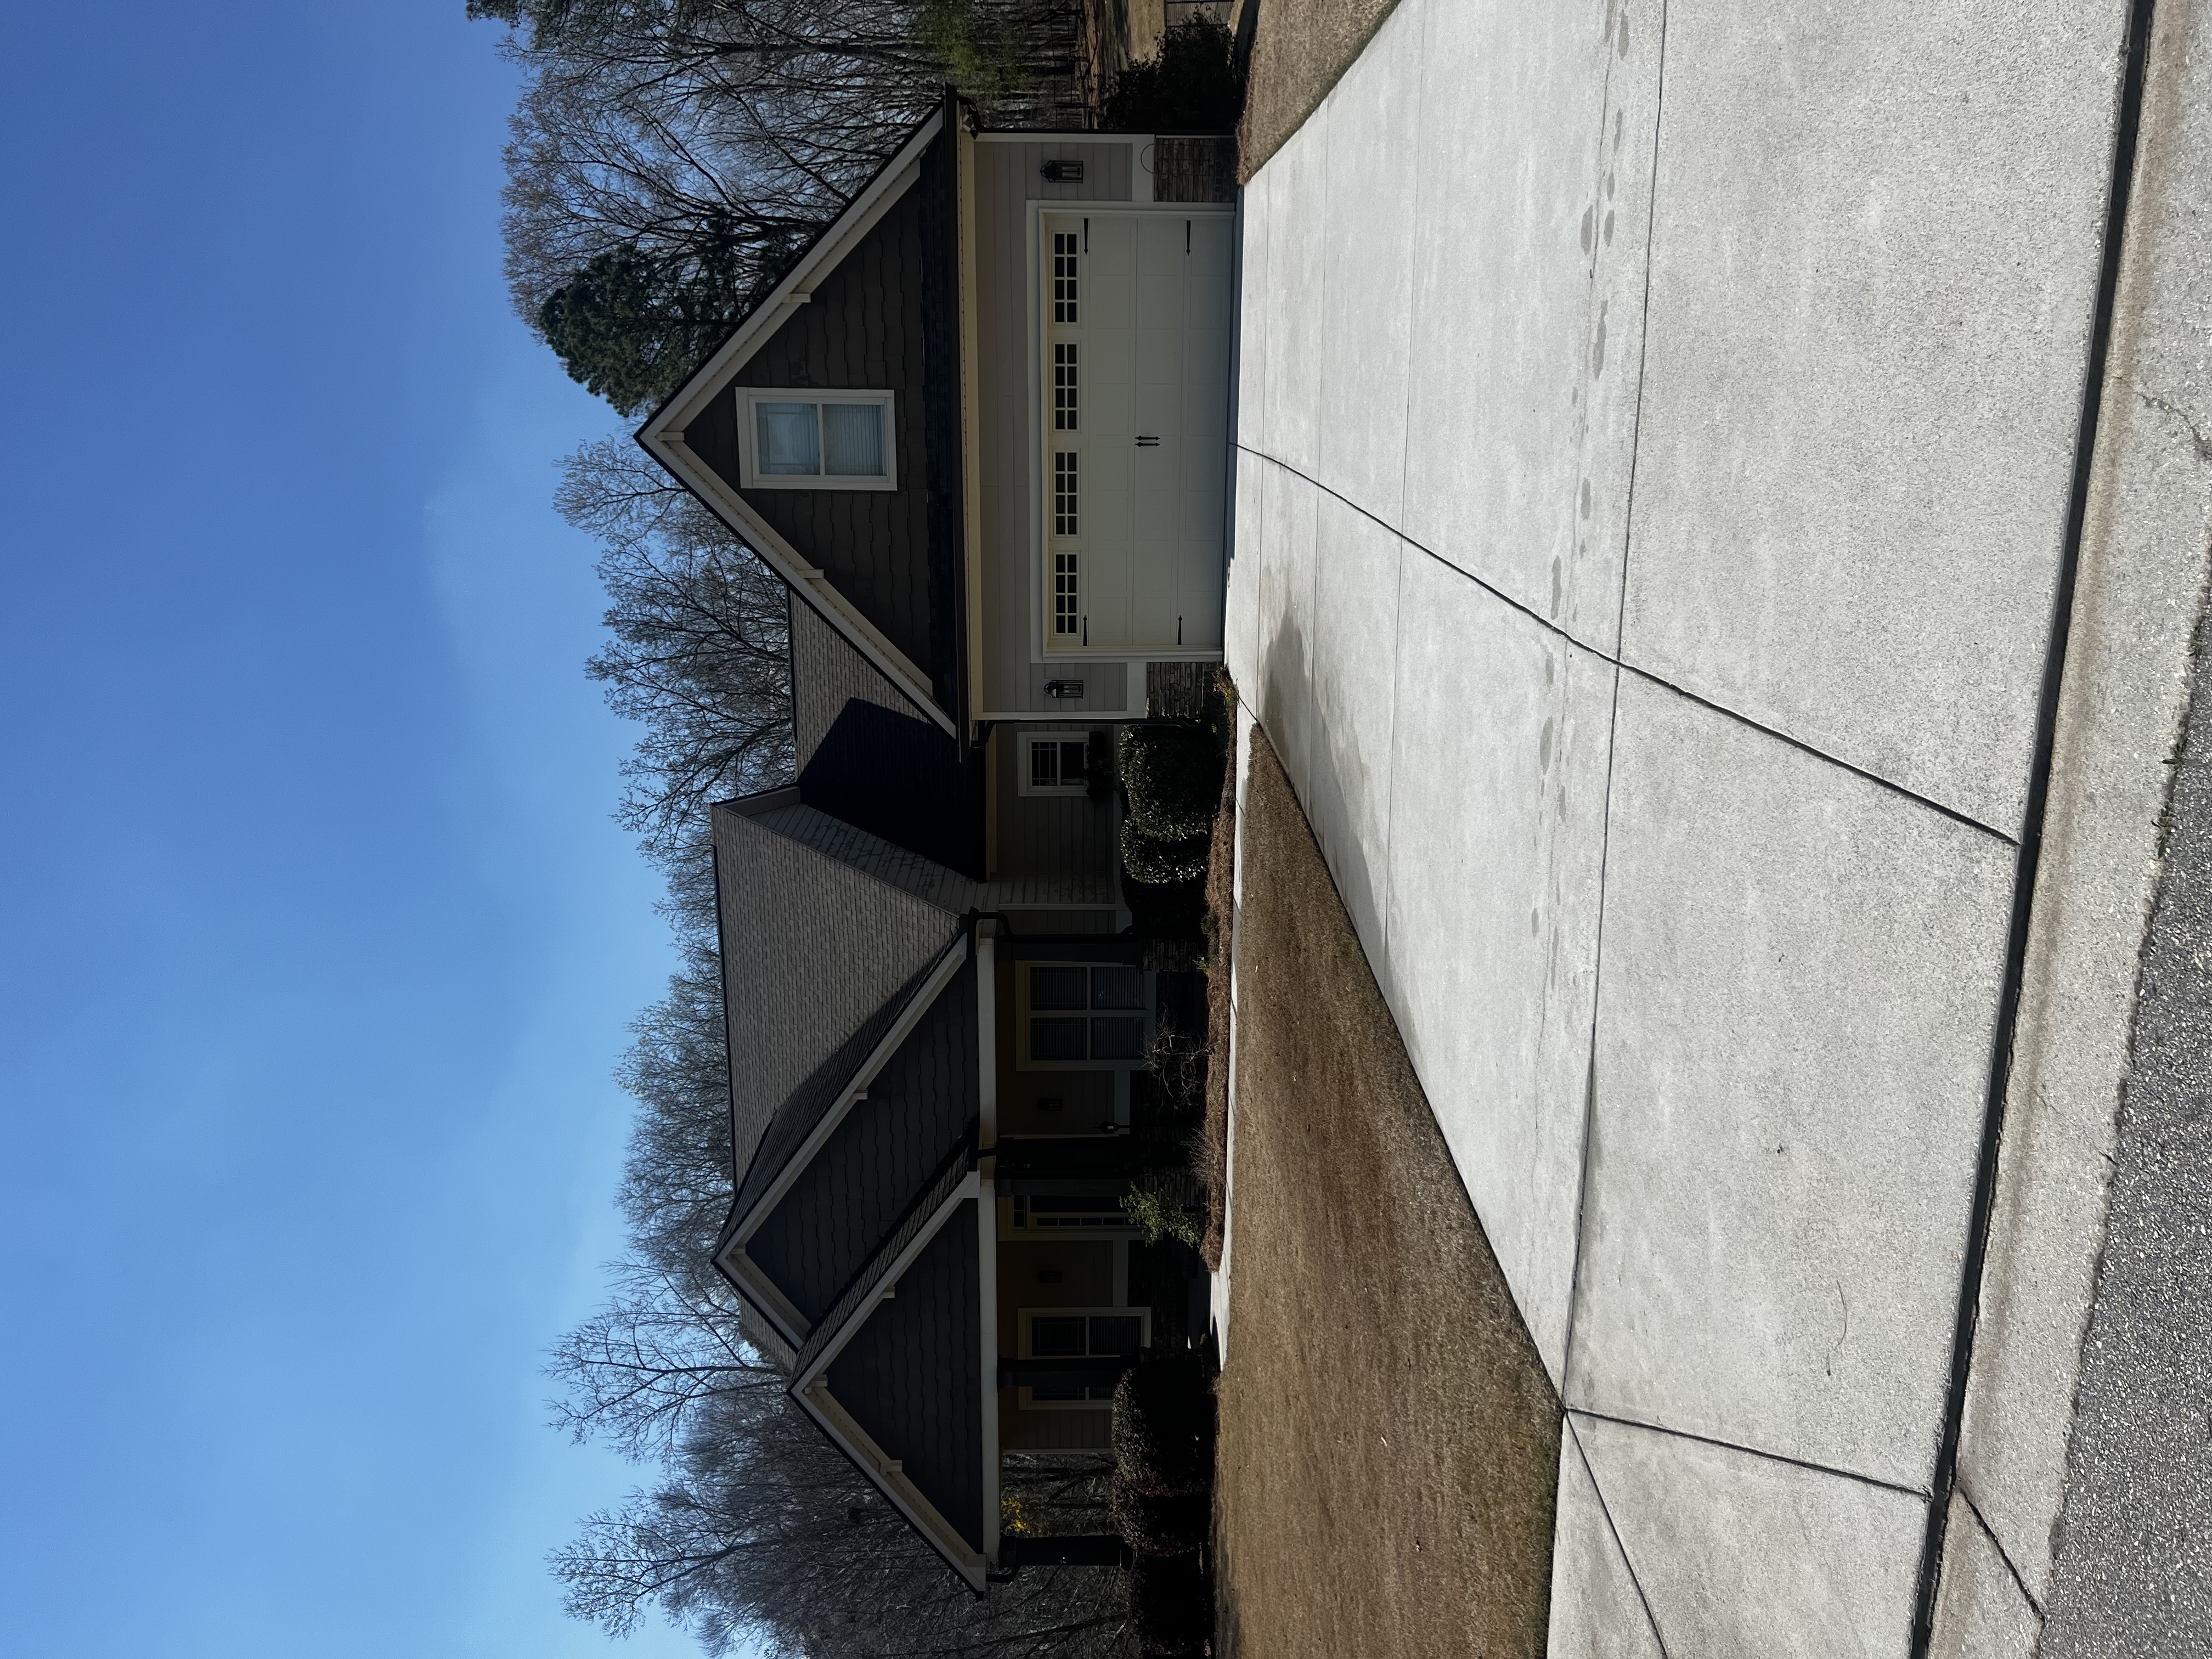 House and driveway wash in Monroe, Ga